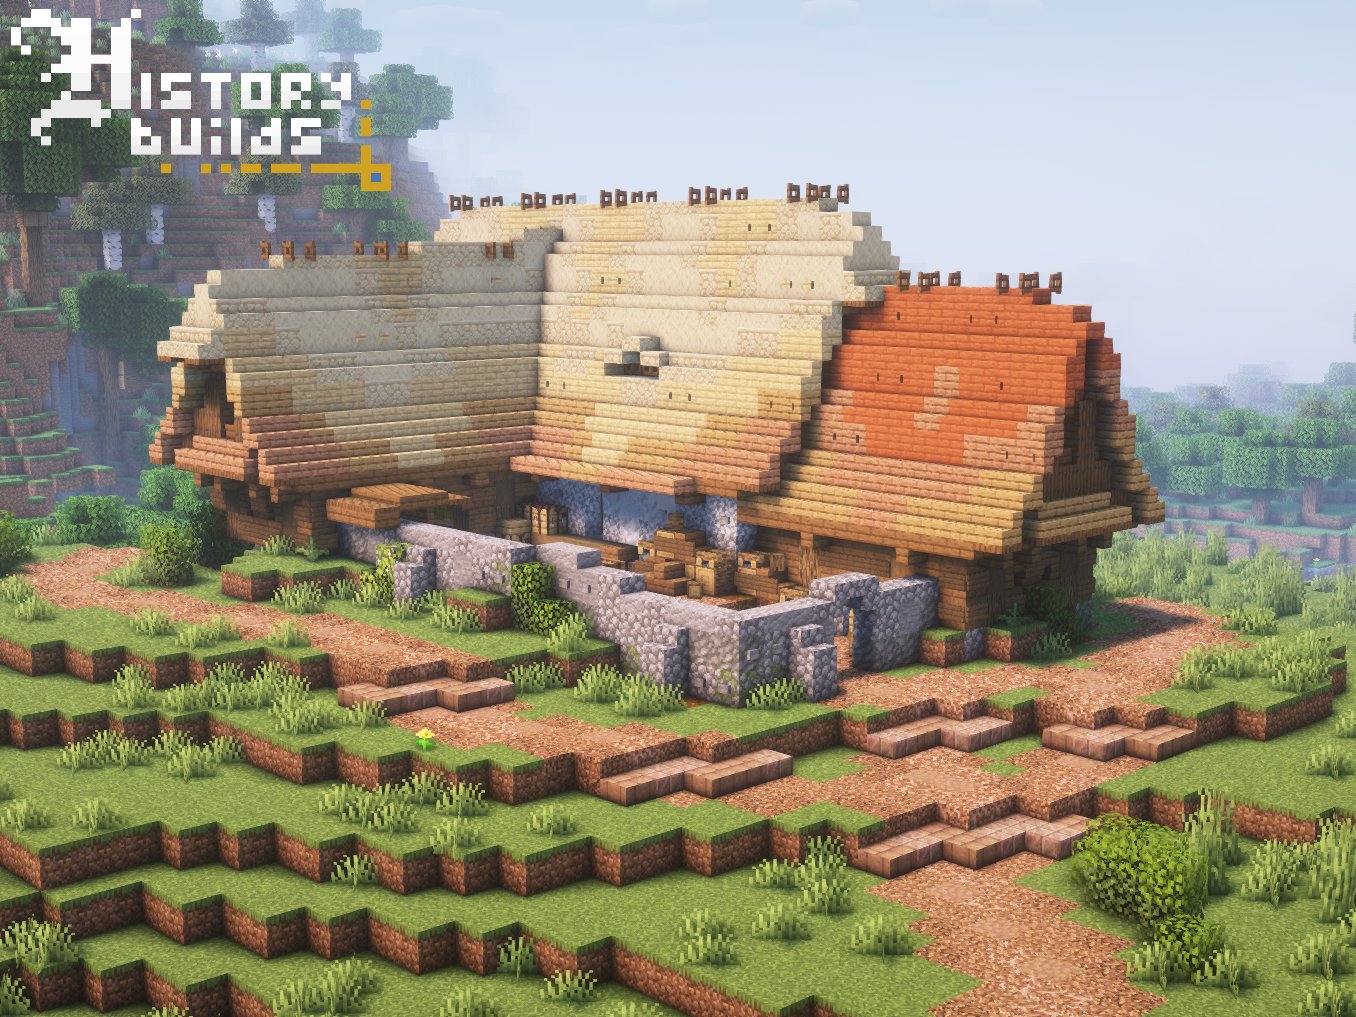 SurvivalHouse  Minecraft medieval, Minecraft medieval house, Minecraft  construction